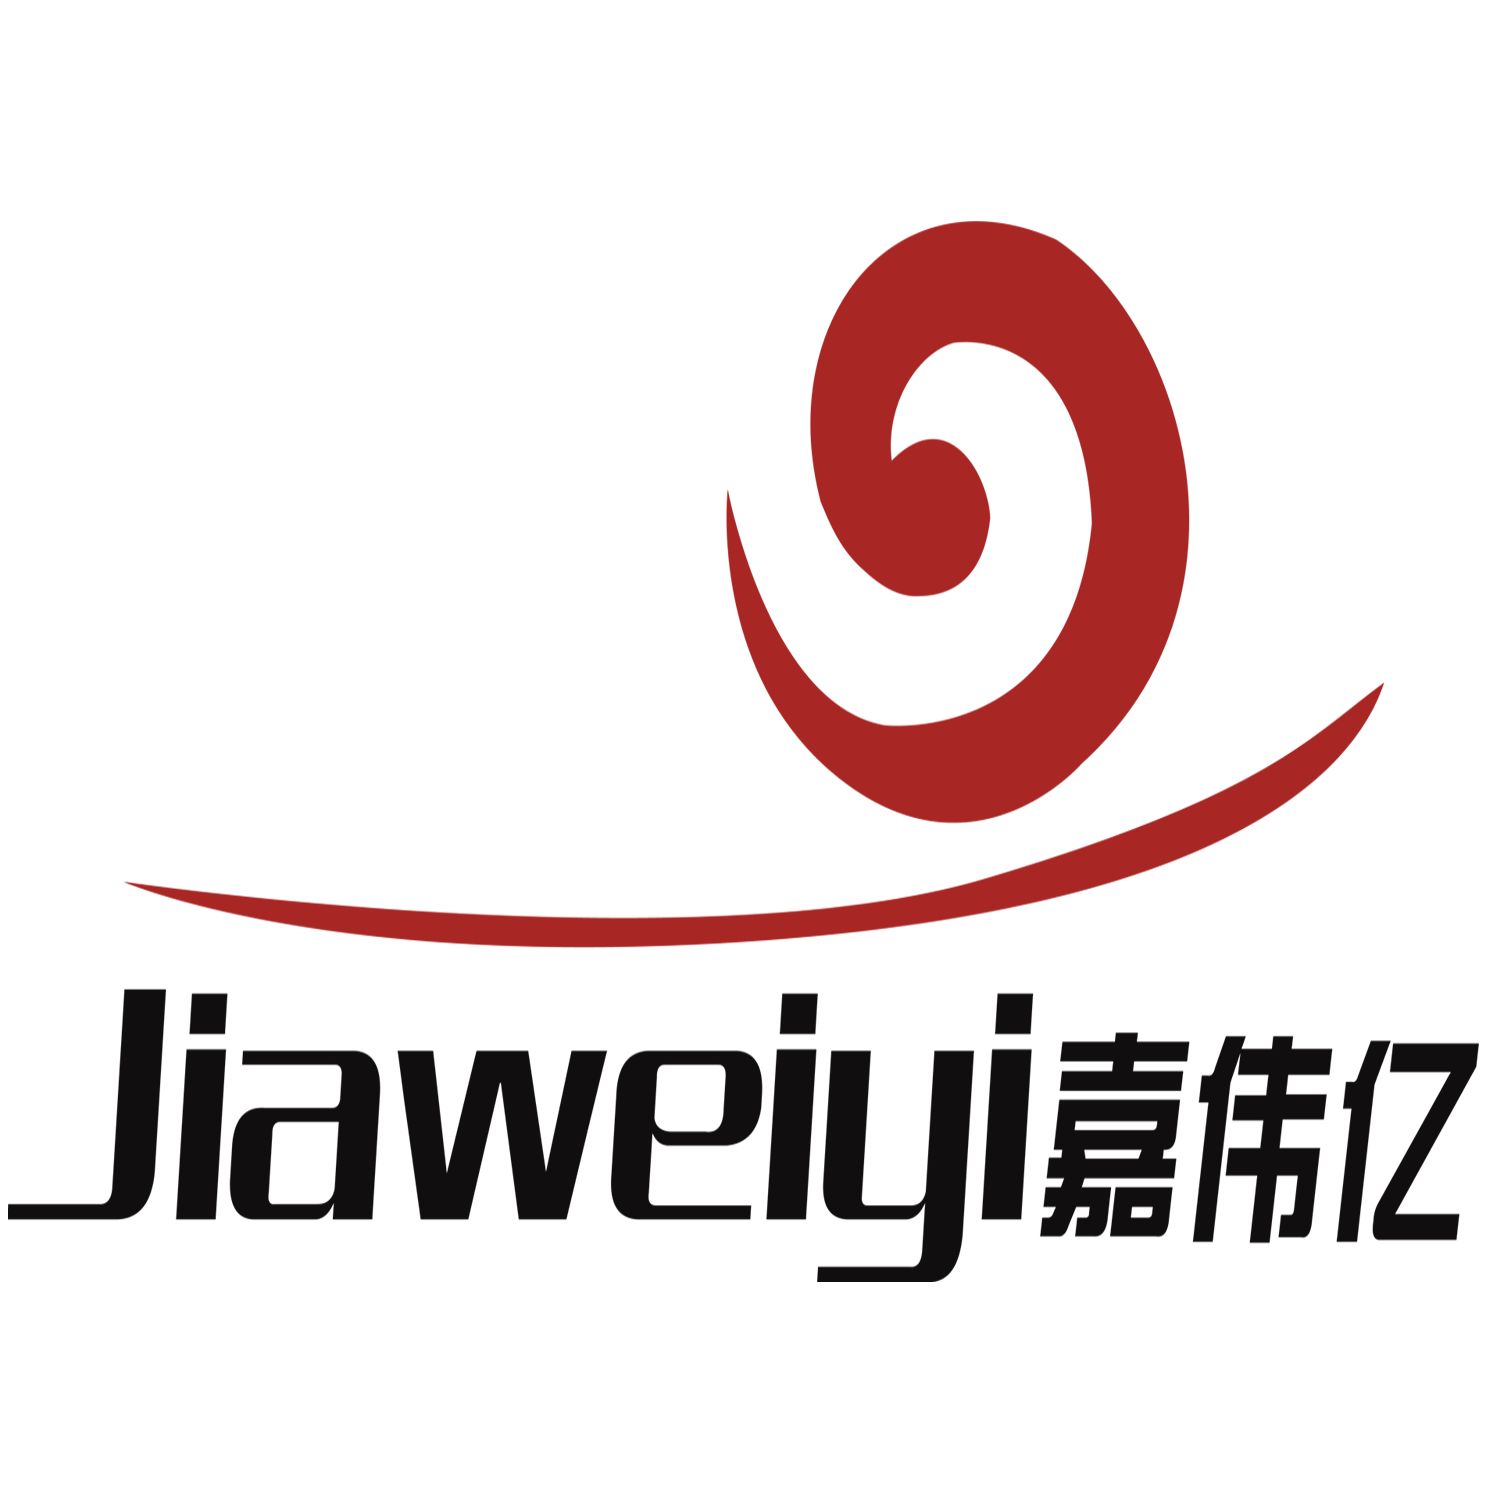 Shenzhen Jiaweiyi Technology Co., Ltd logo